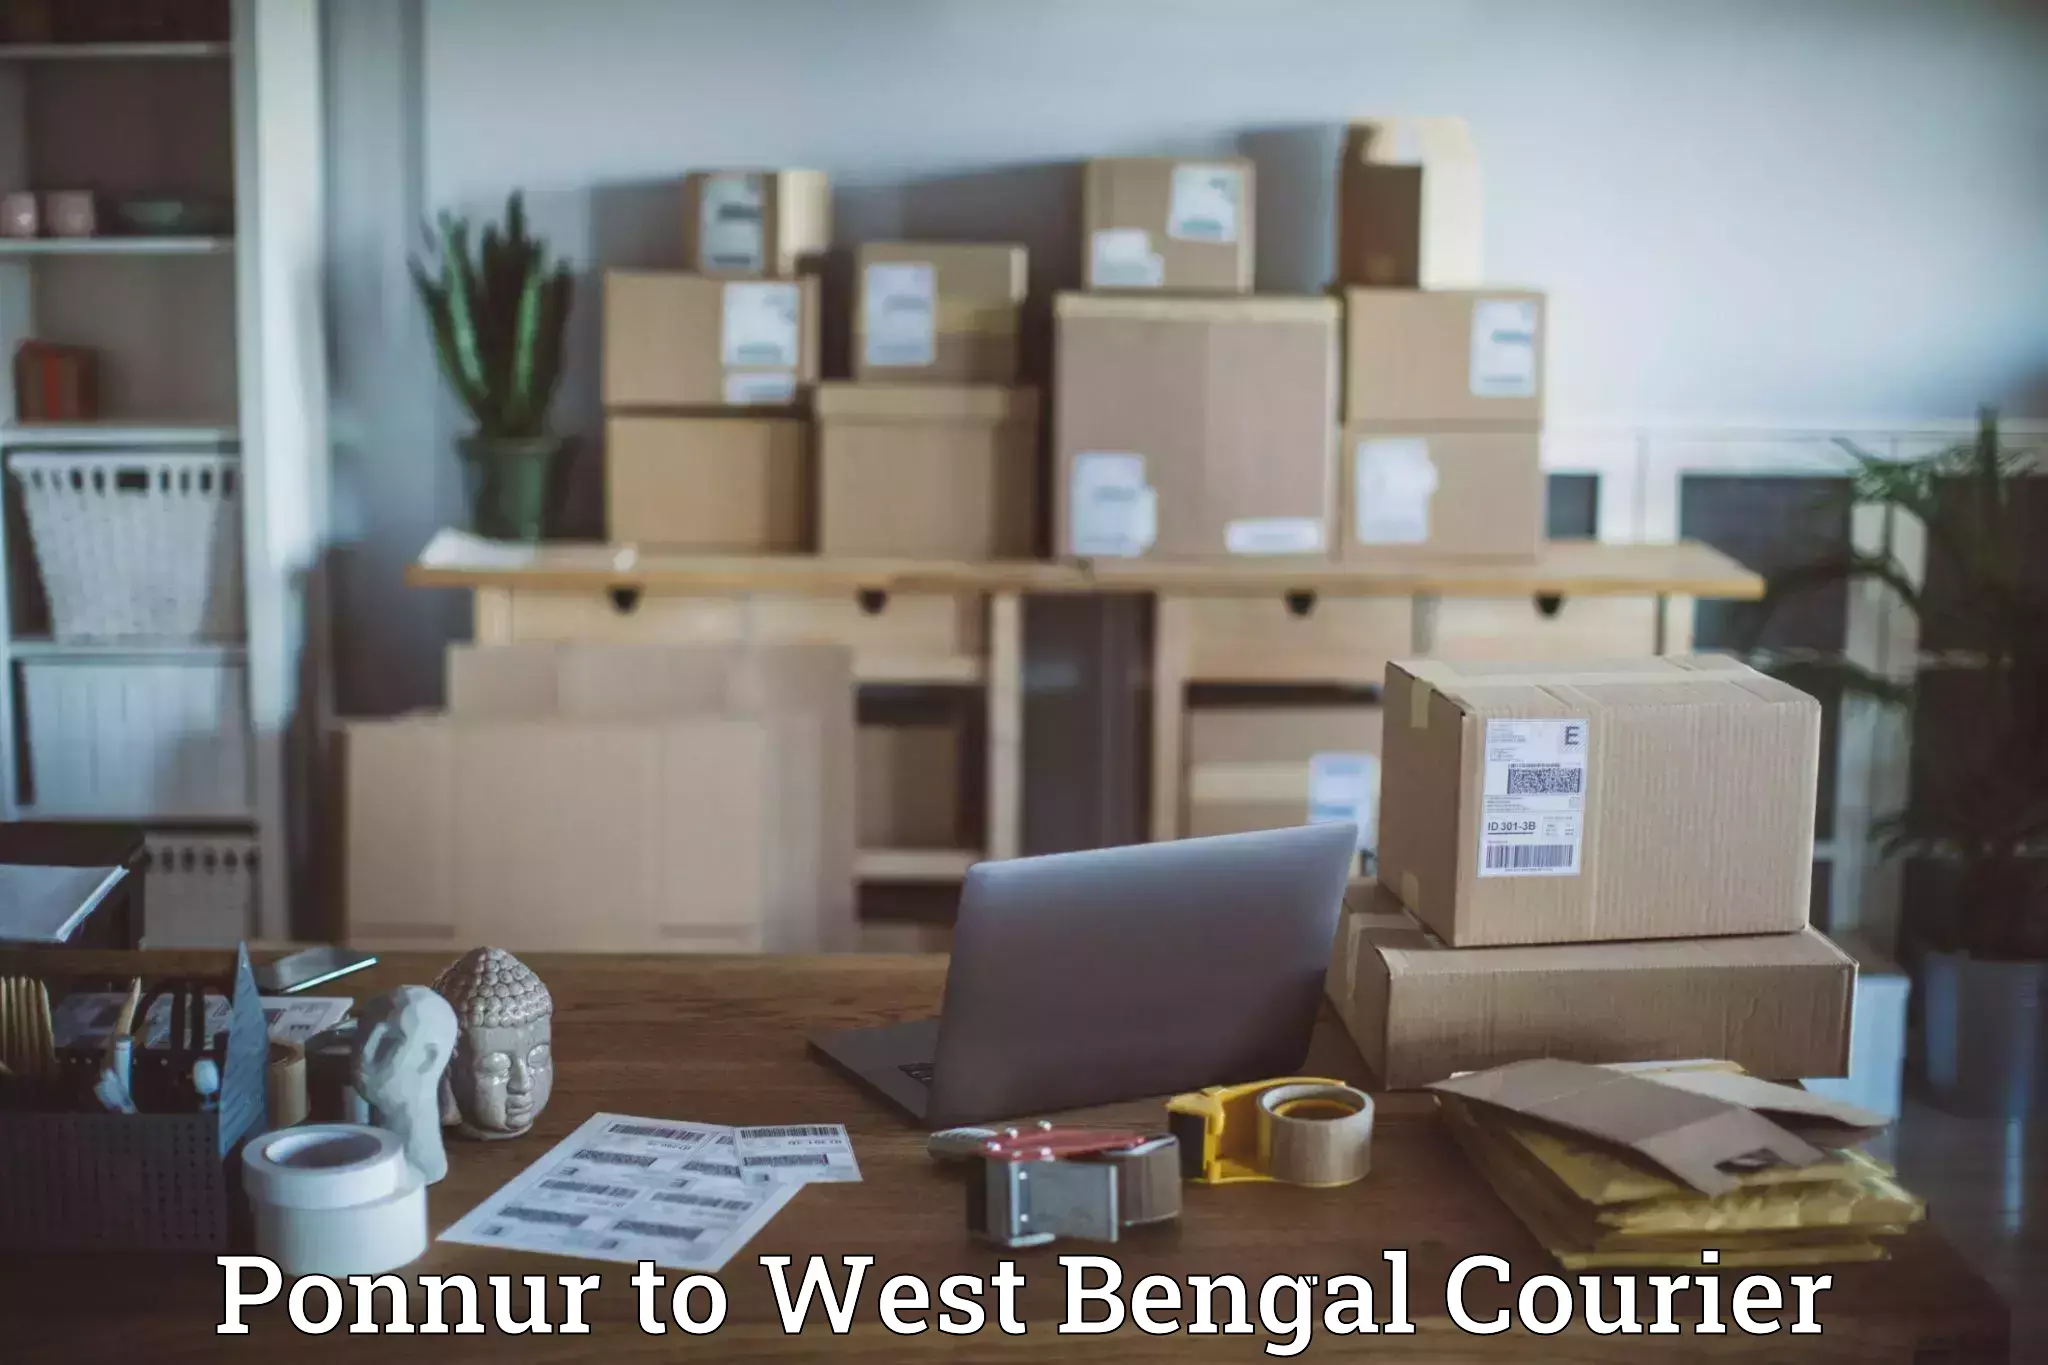 Global logistics network Ponnur to West Bengal